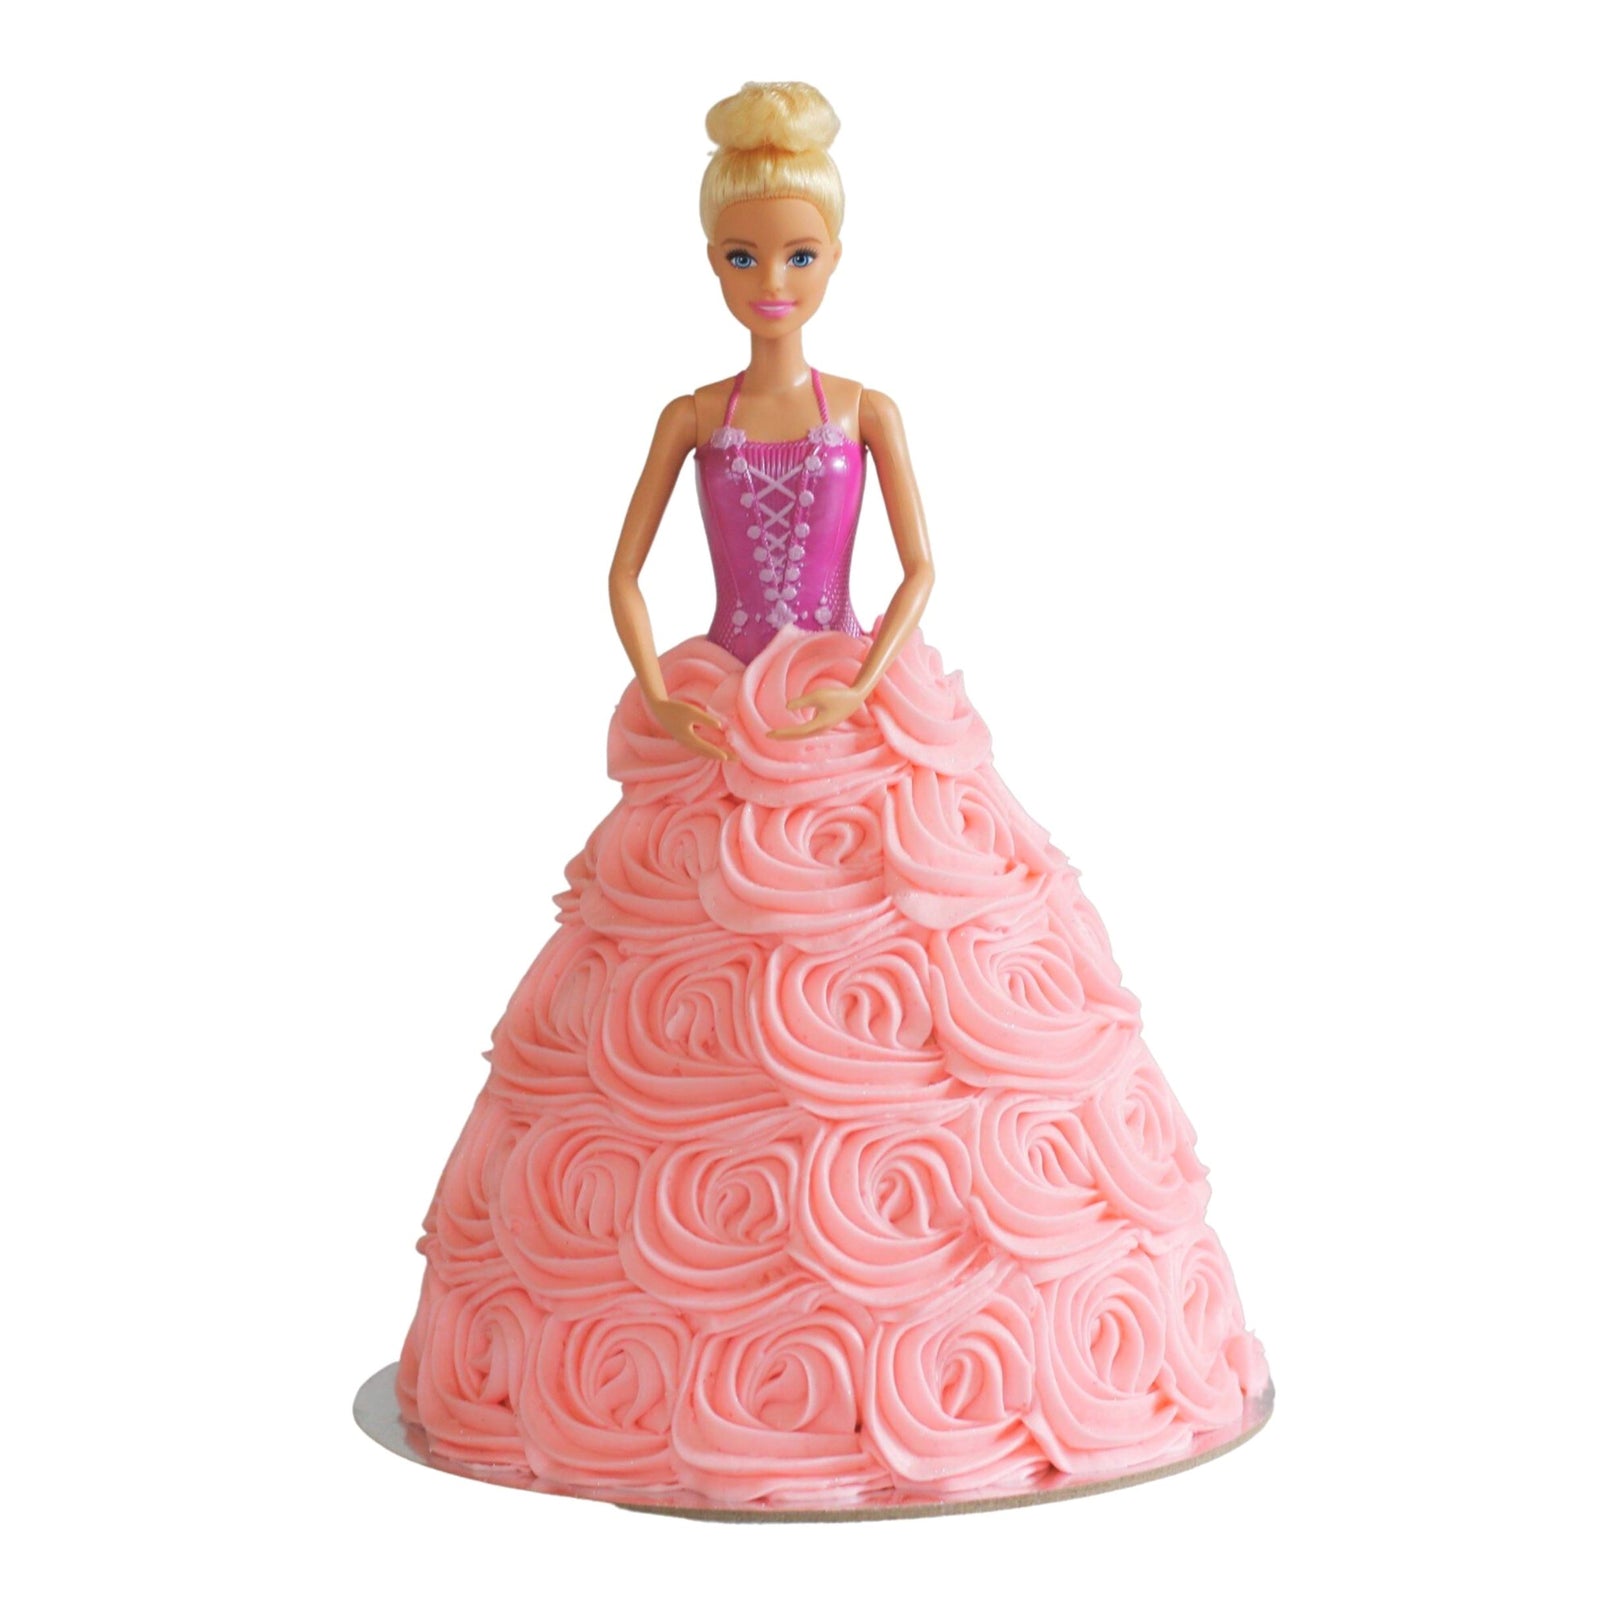 DigiCrumbs: Rapunzel Birthday Cake featuring Disney's Tangled Rapunzel Doll